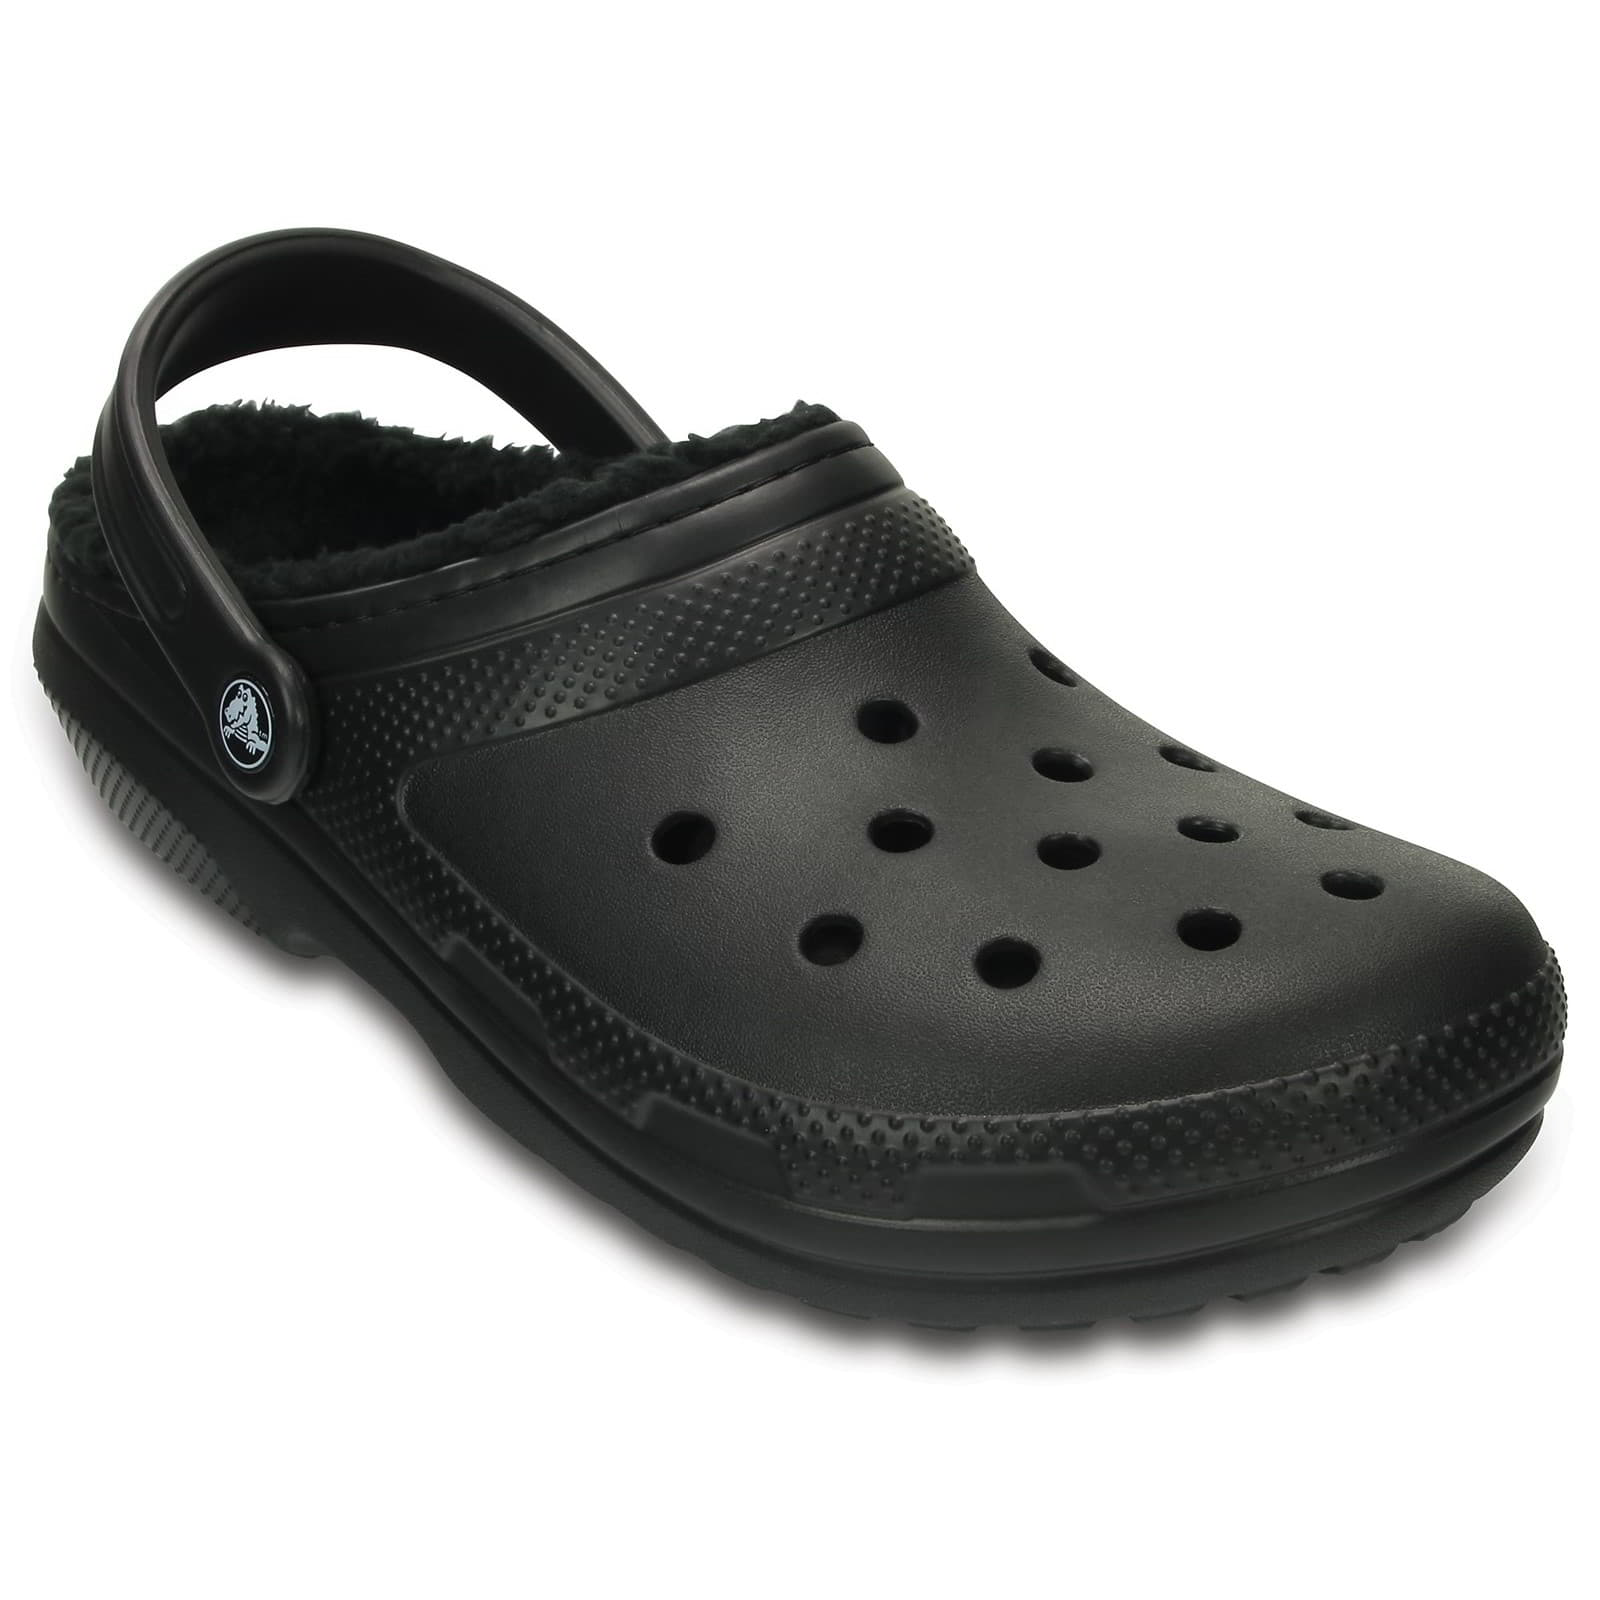 Crocs Men's Women's Classic Lined Clogs Slip On Slippers Shoes - UK 9